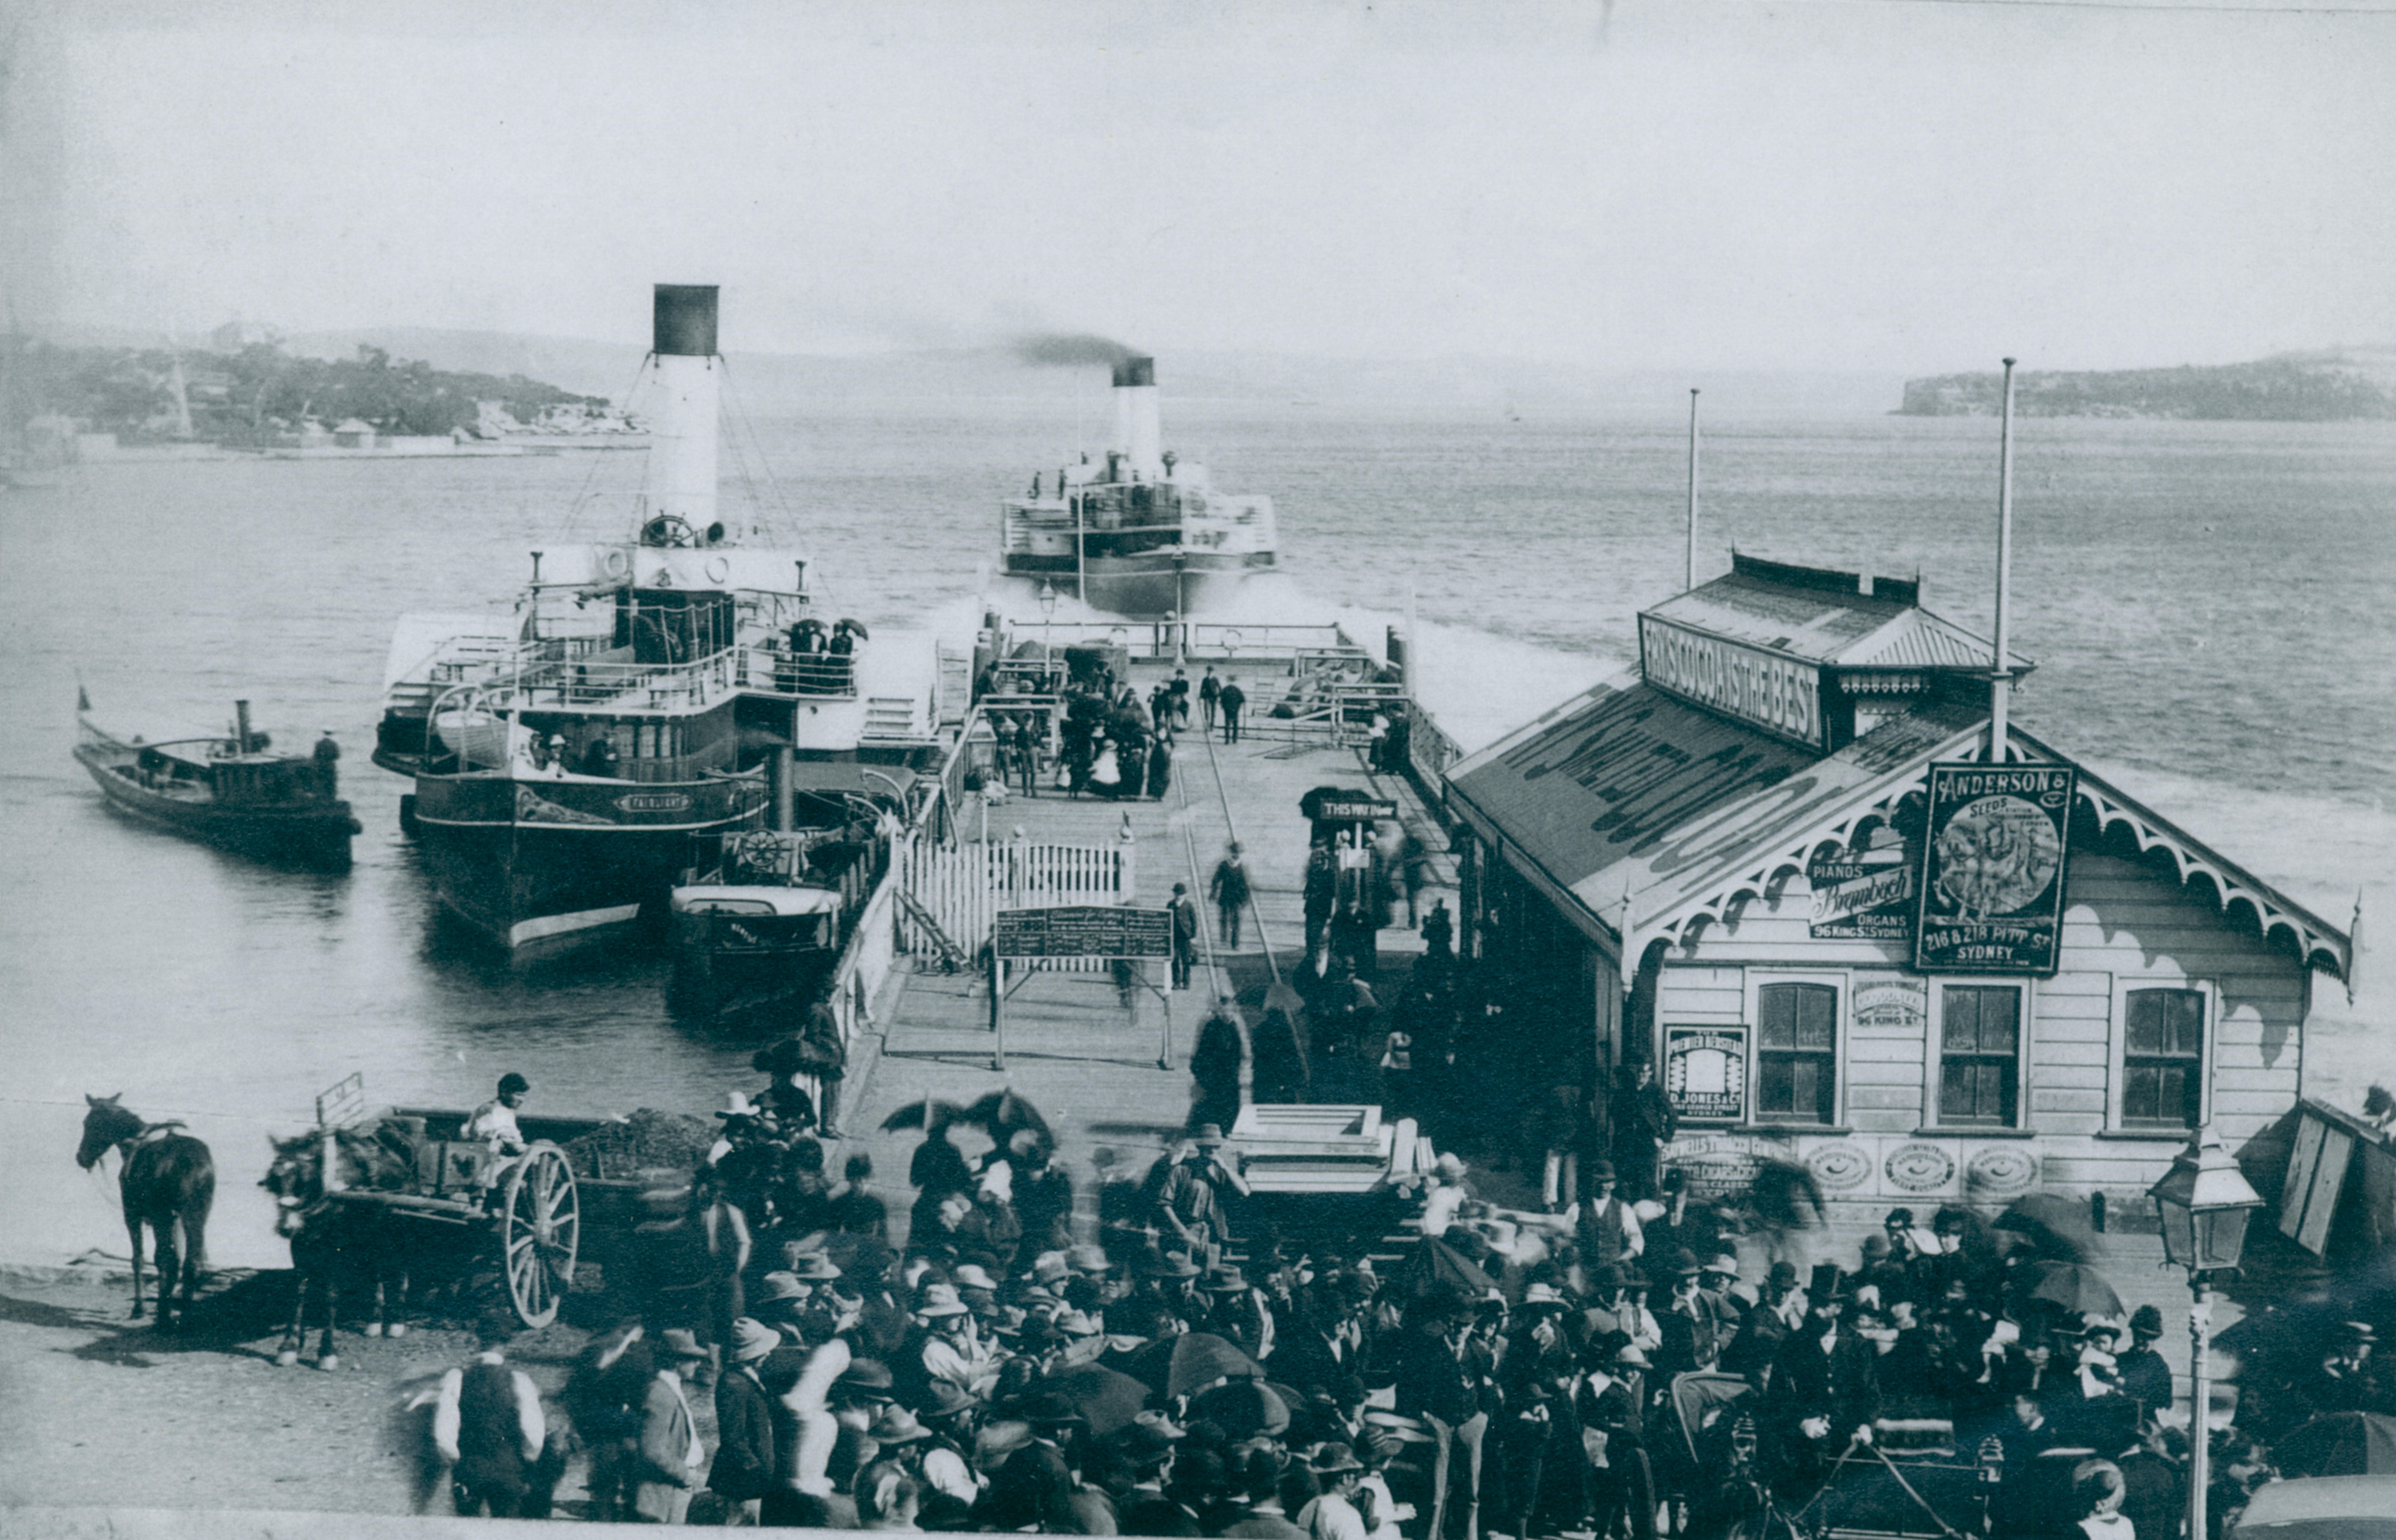 Ferry_Fairlight_at_Manly_Wharf_1887.jpg